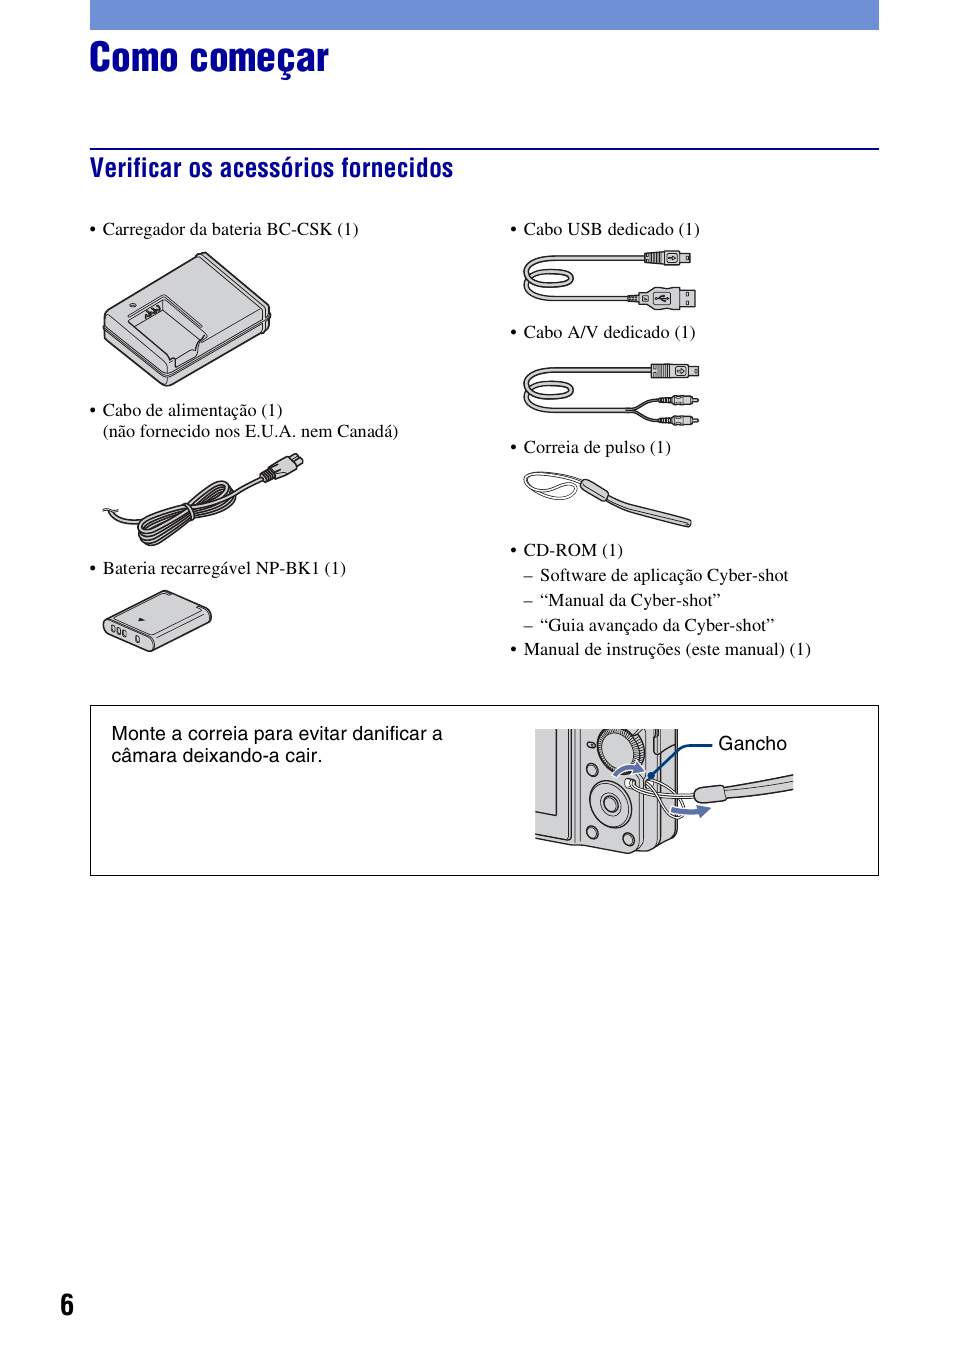 Como começar, Verificar os acessórios fornecidos | Sony DSC-S780 Manual del usuario | Página 36 / 64